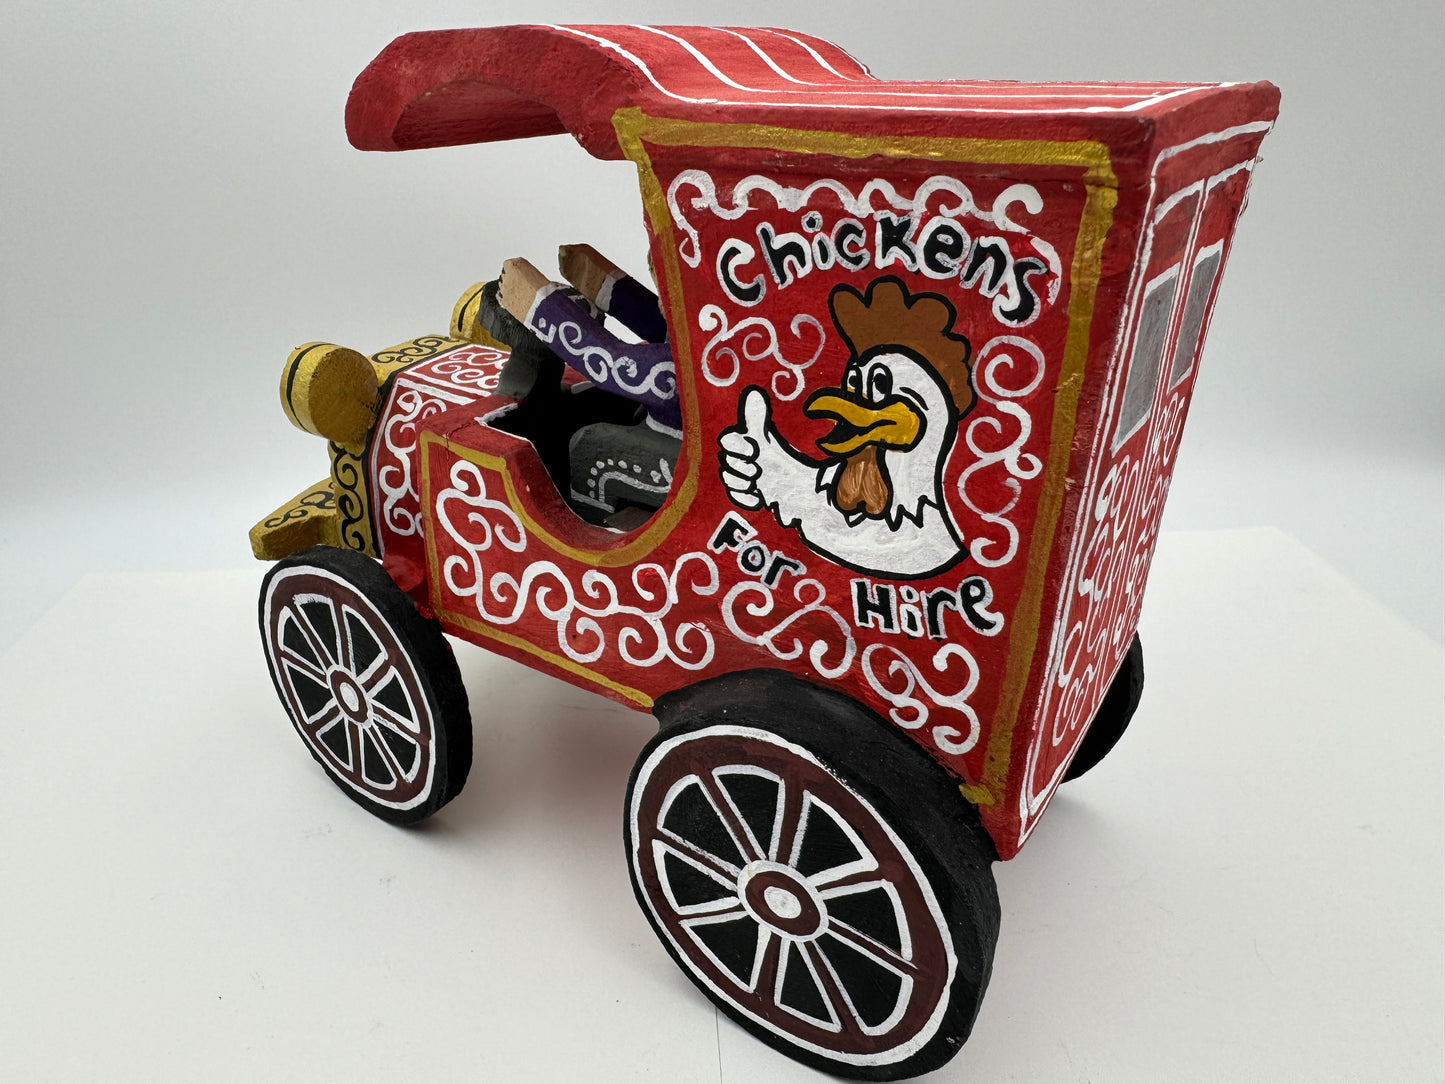 Delbert Buck Chicken For Hire Truck #0022